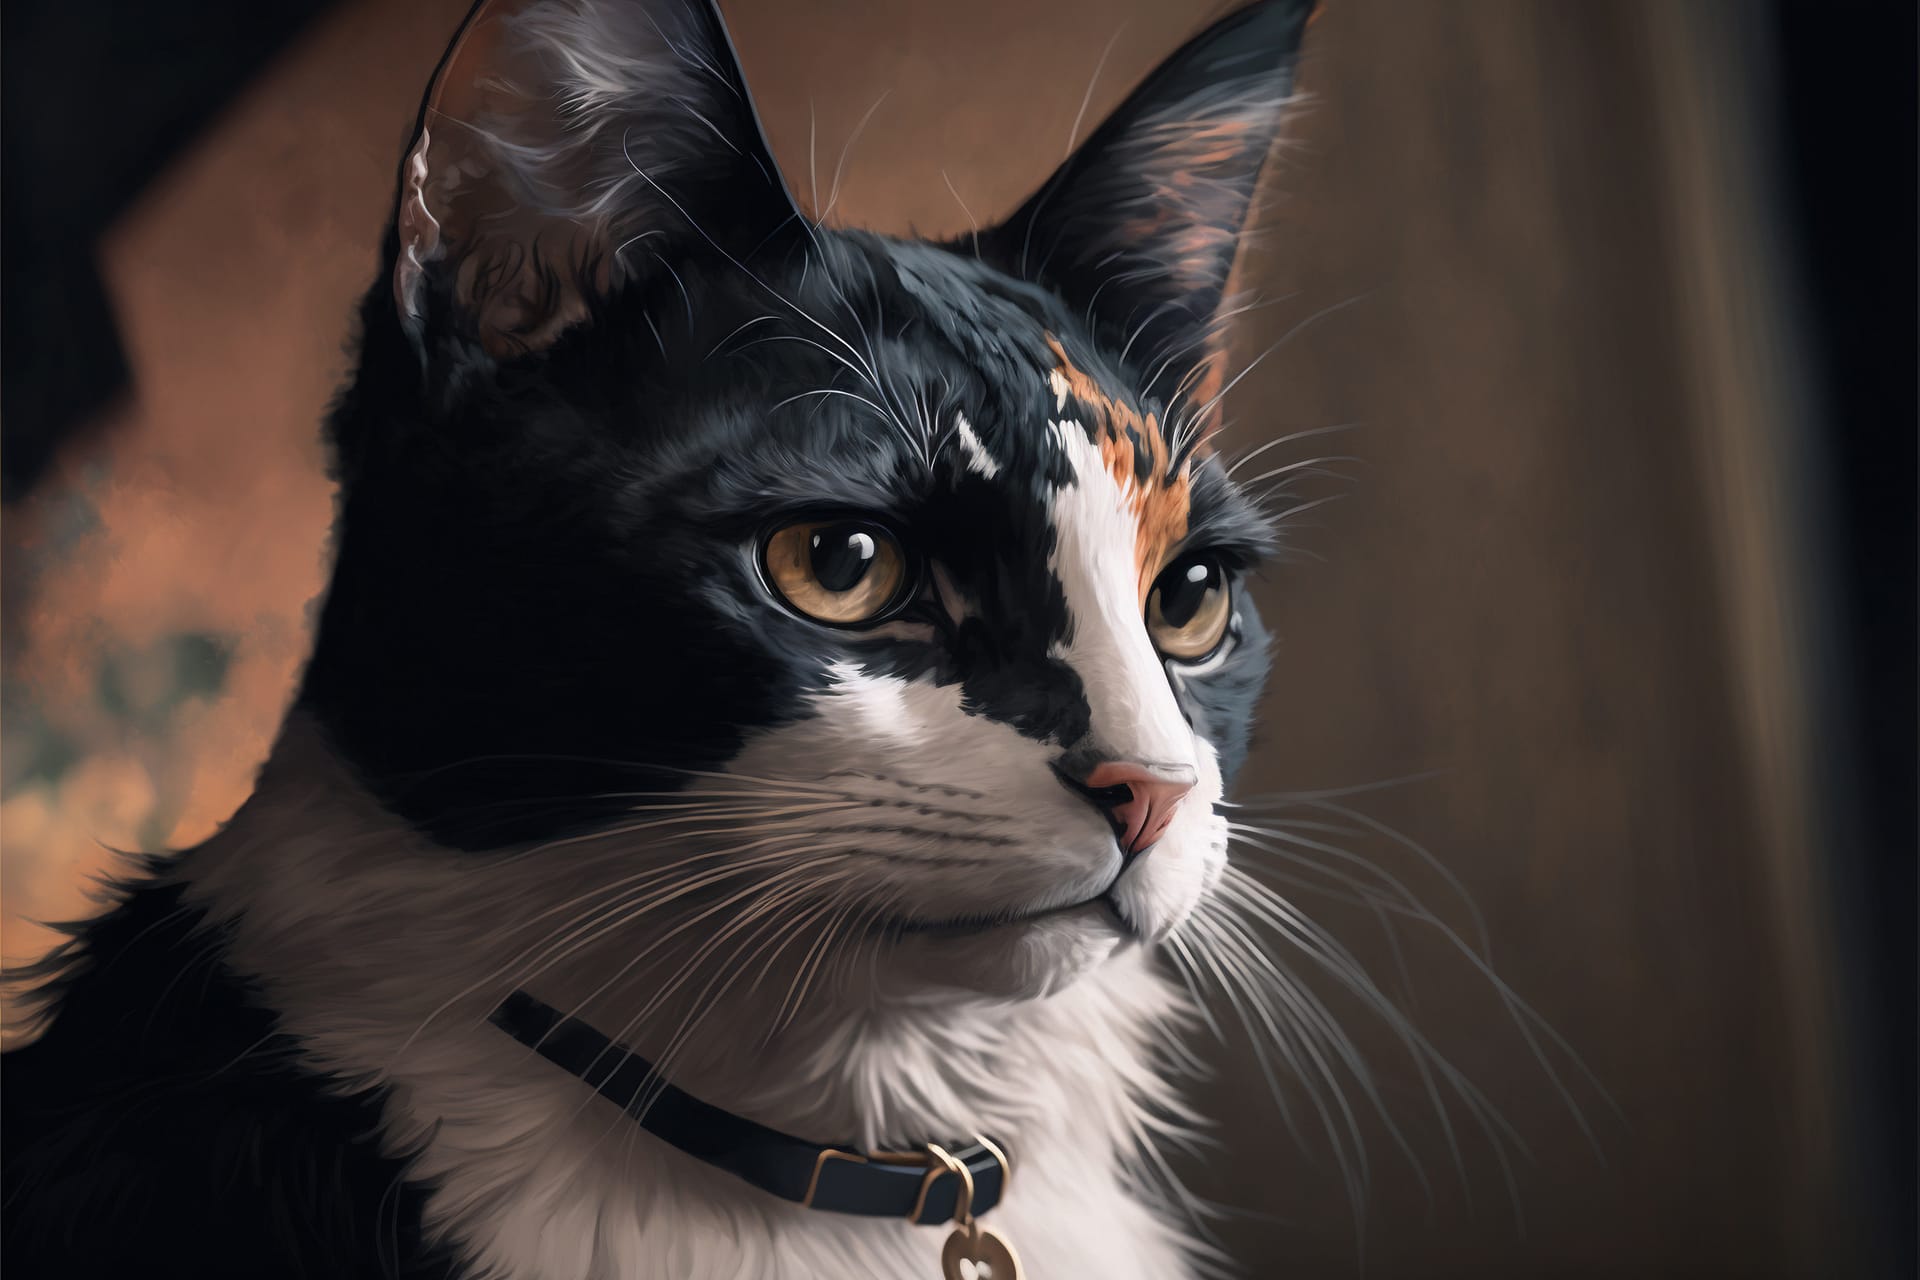 Digital portrait cat creative digital painting image